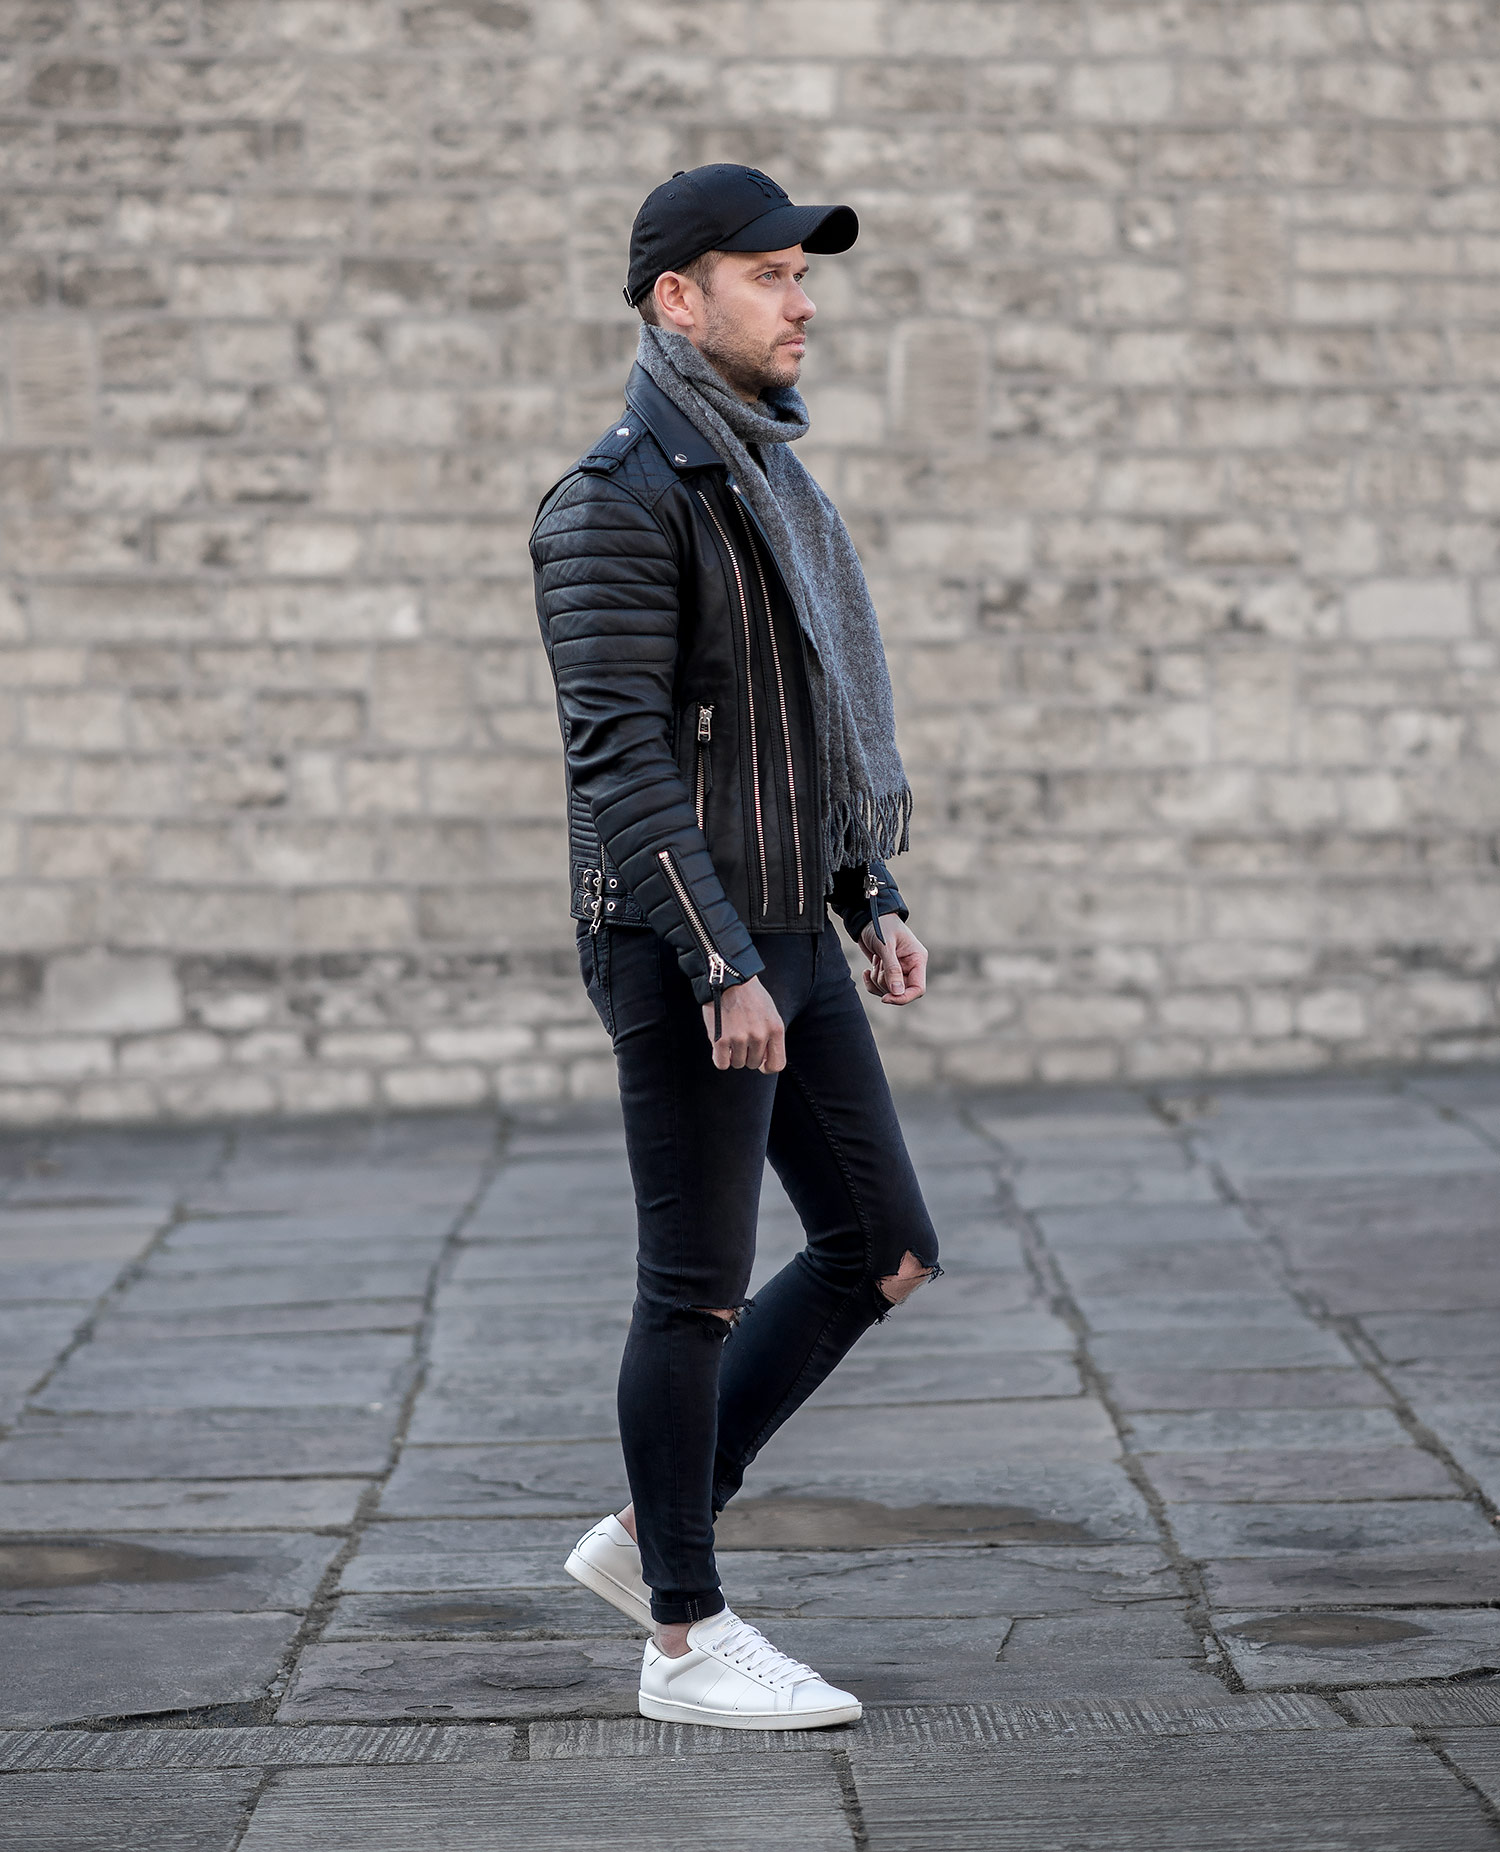 Boda Skins Biker Jacket Winter Style - Your Average Guy